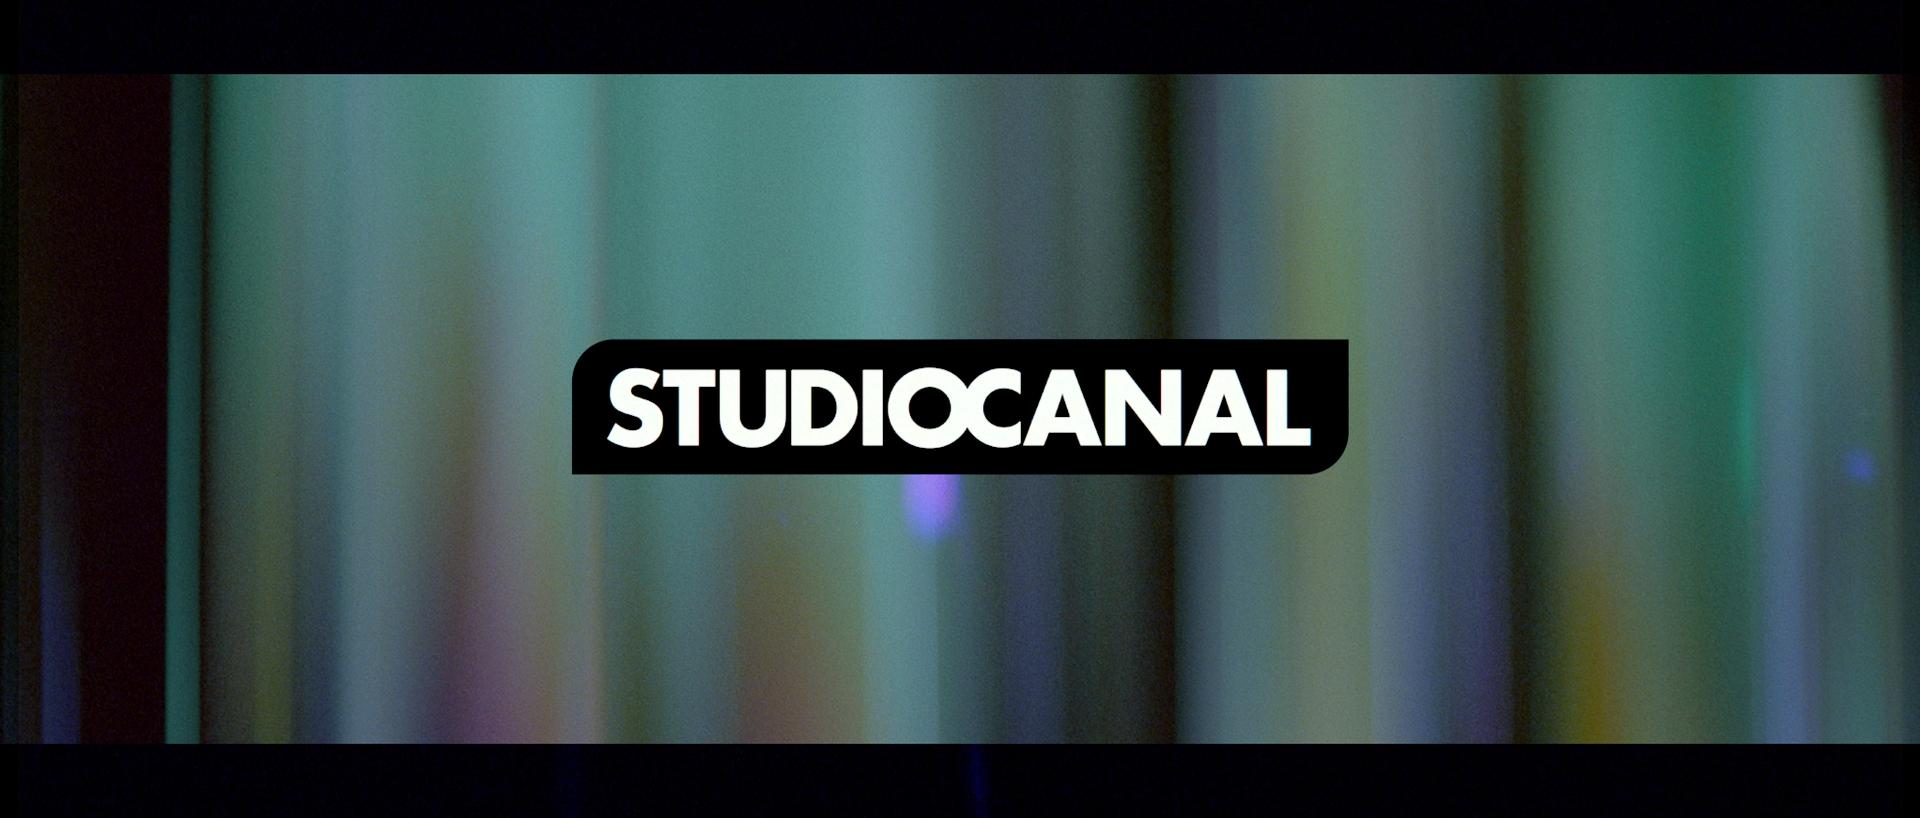 Studio Canal s'allie à un fonds d'investissement international